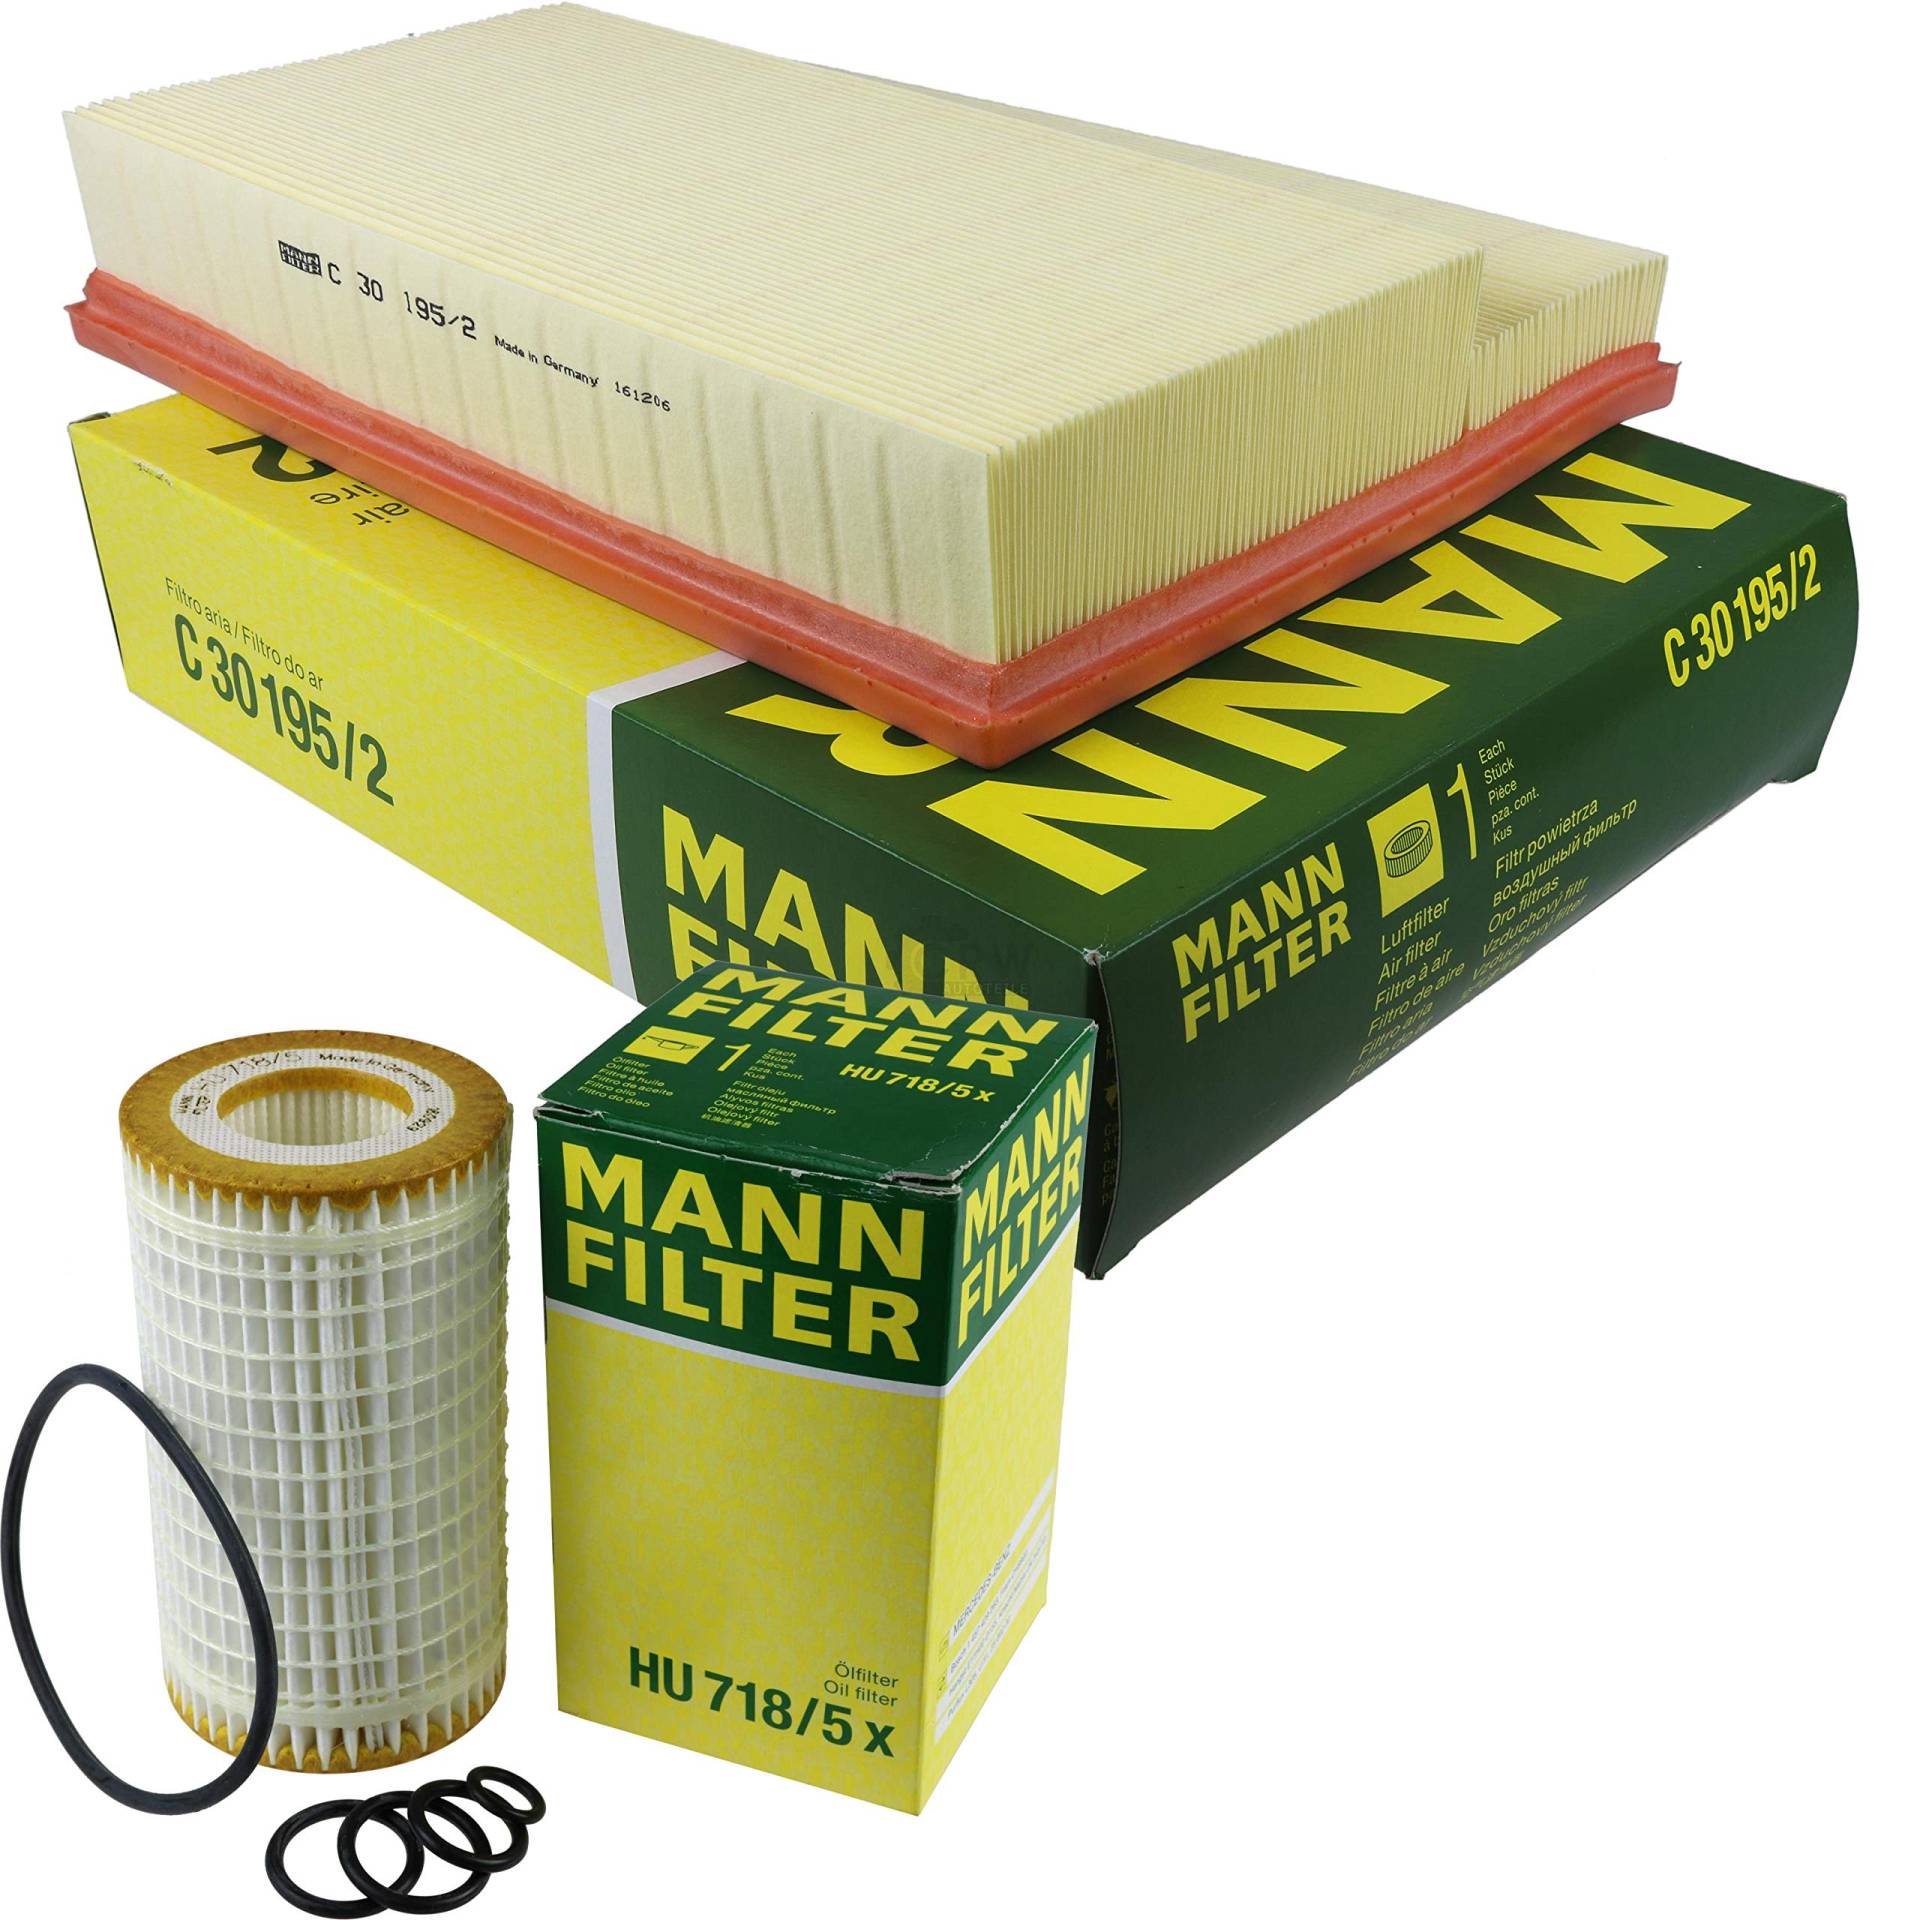 MANN-FILTER Inspektions Set Inspektionspaket Luftfilter Ölfilter von QR-PARTS